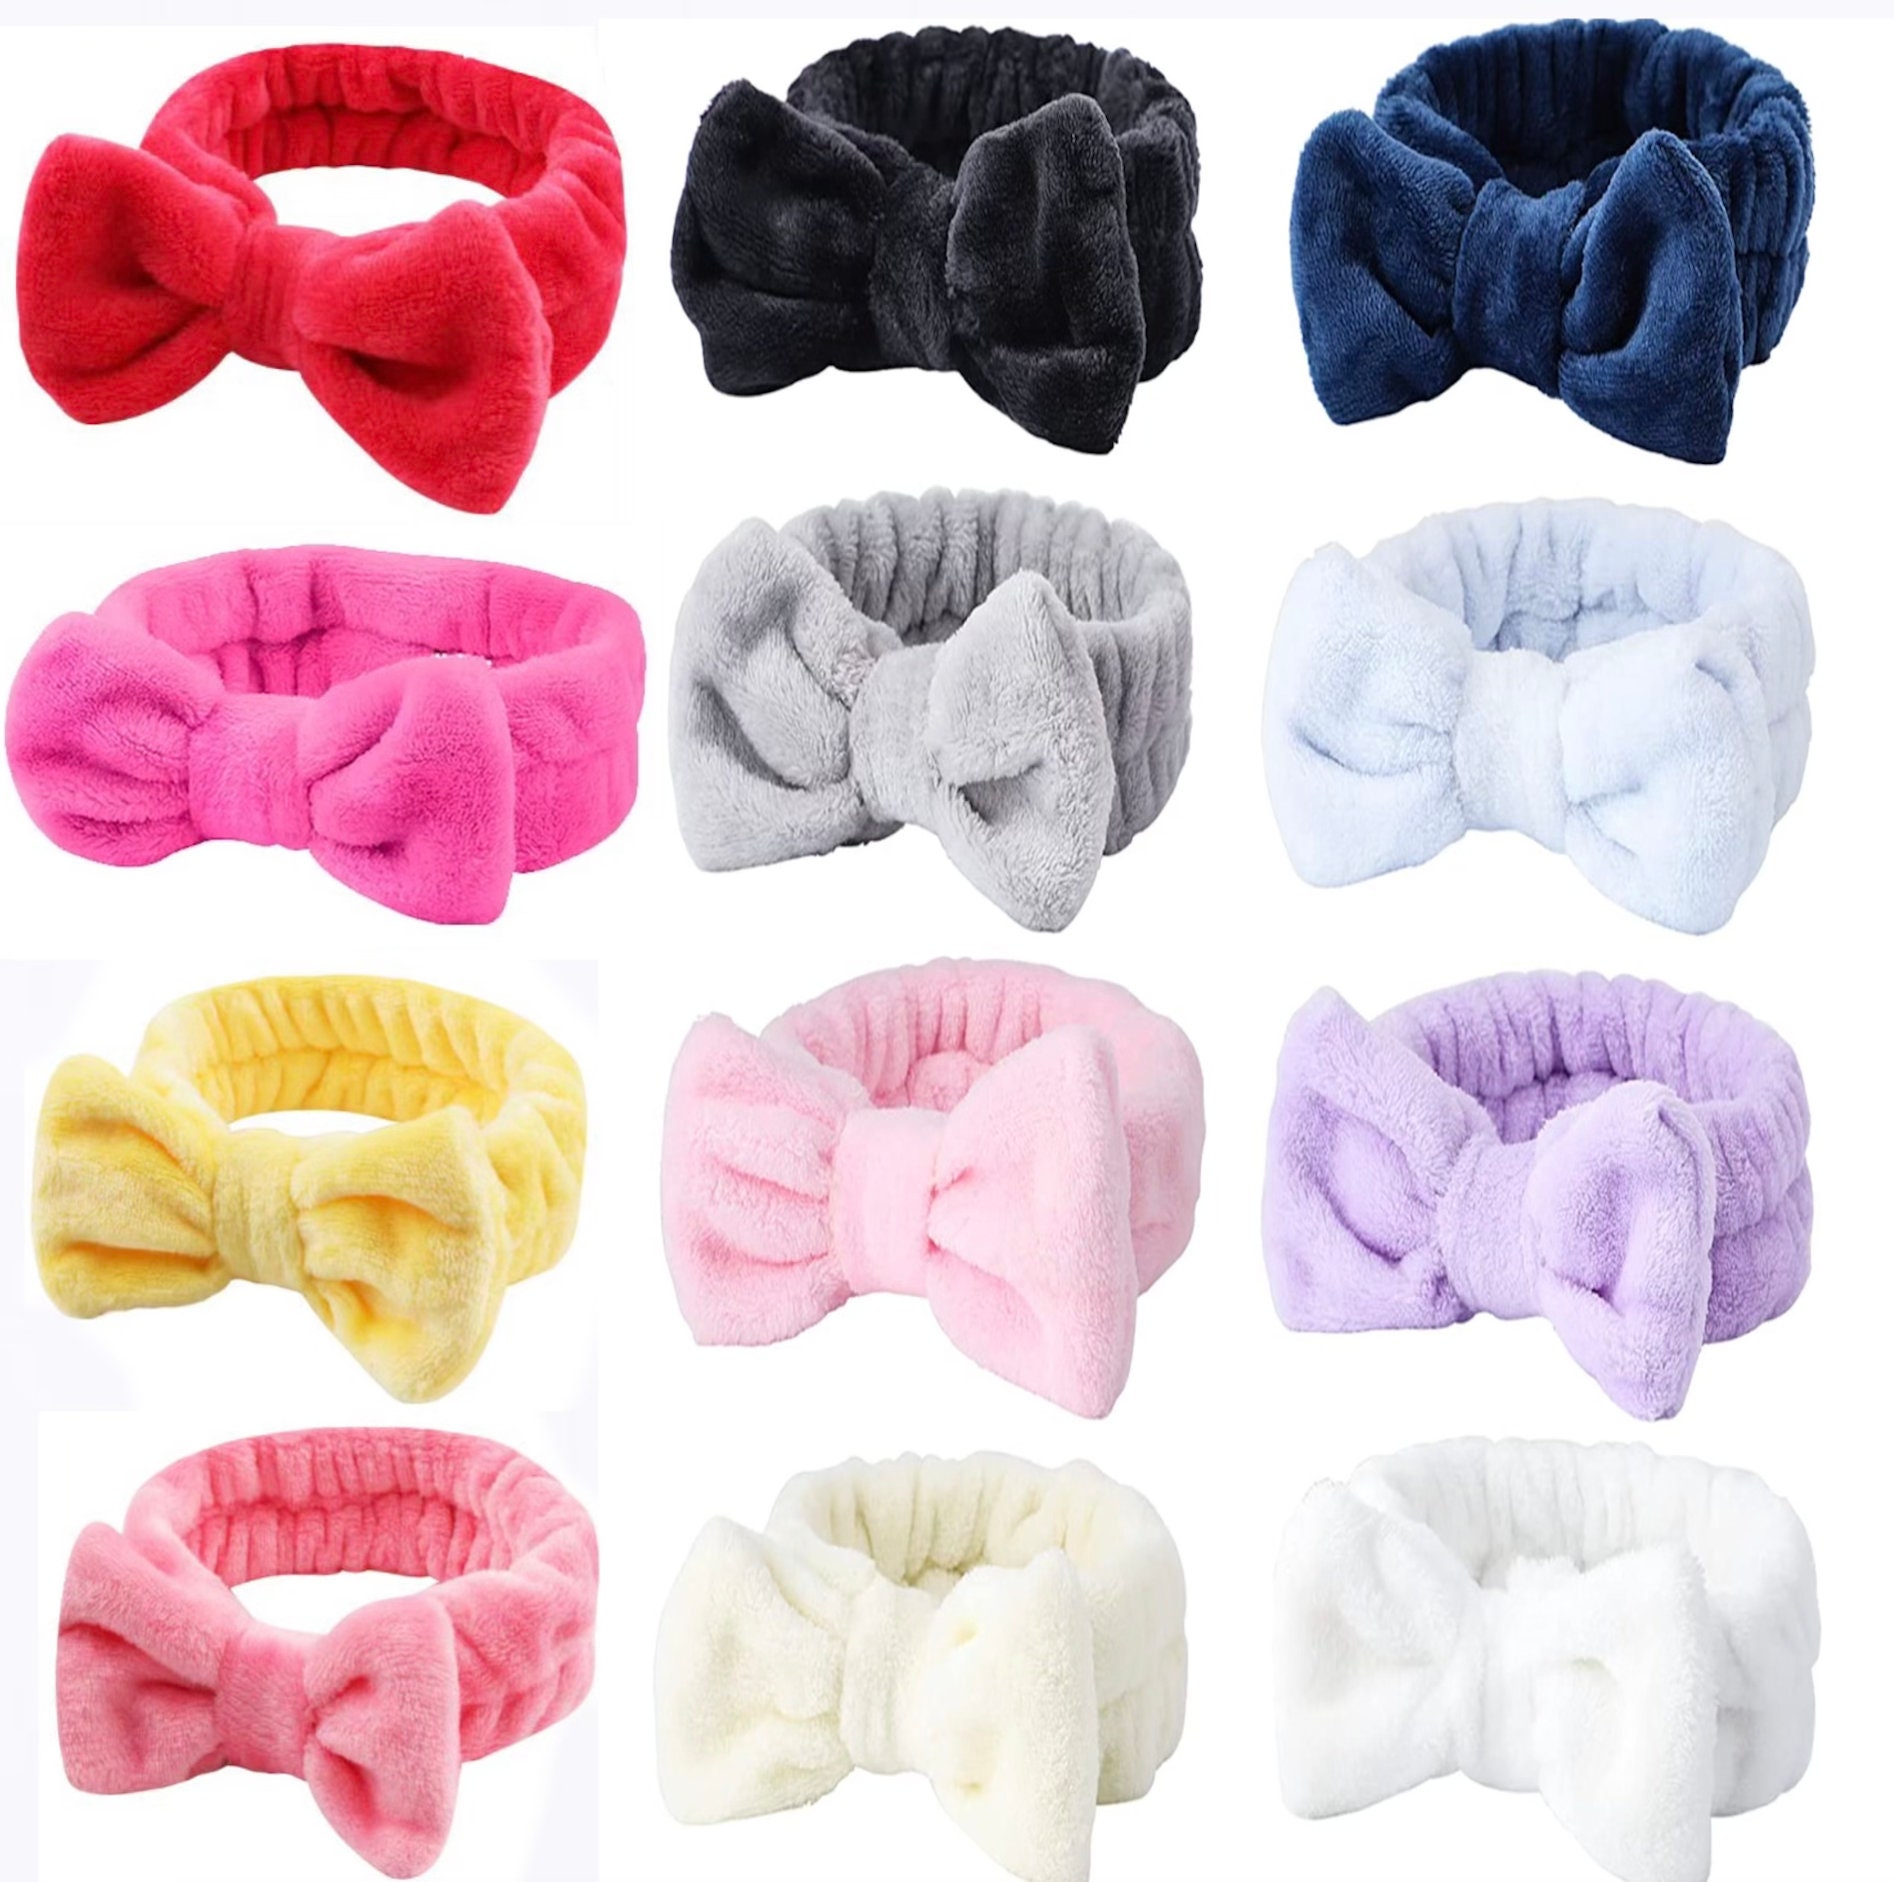 12 Pack Wholesale Spa Headband, Soft Headband, Makeup Headband in Varieties  of Colors. 12 Pc Pack -  Canada